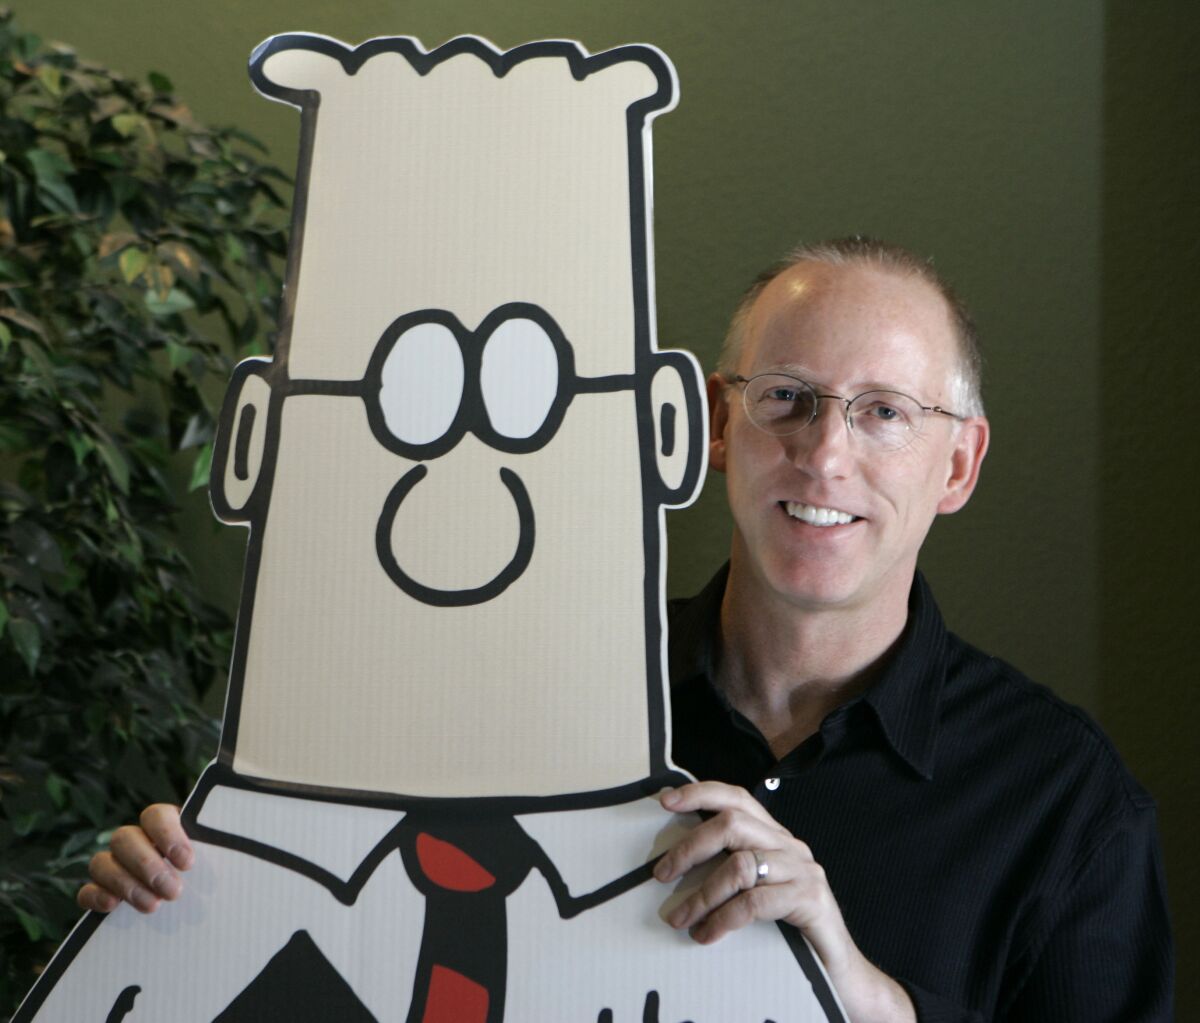 Scott Adams next to a cardboard cutout of his character Dilbert